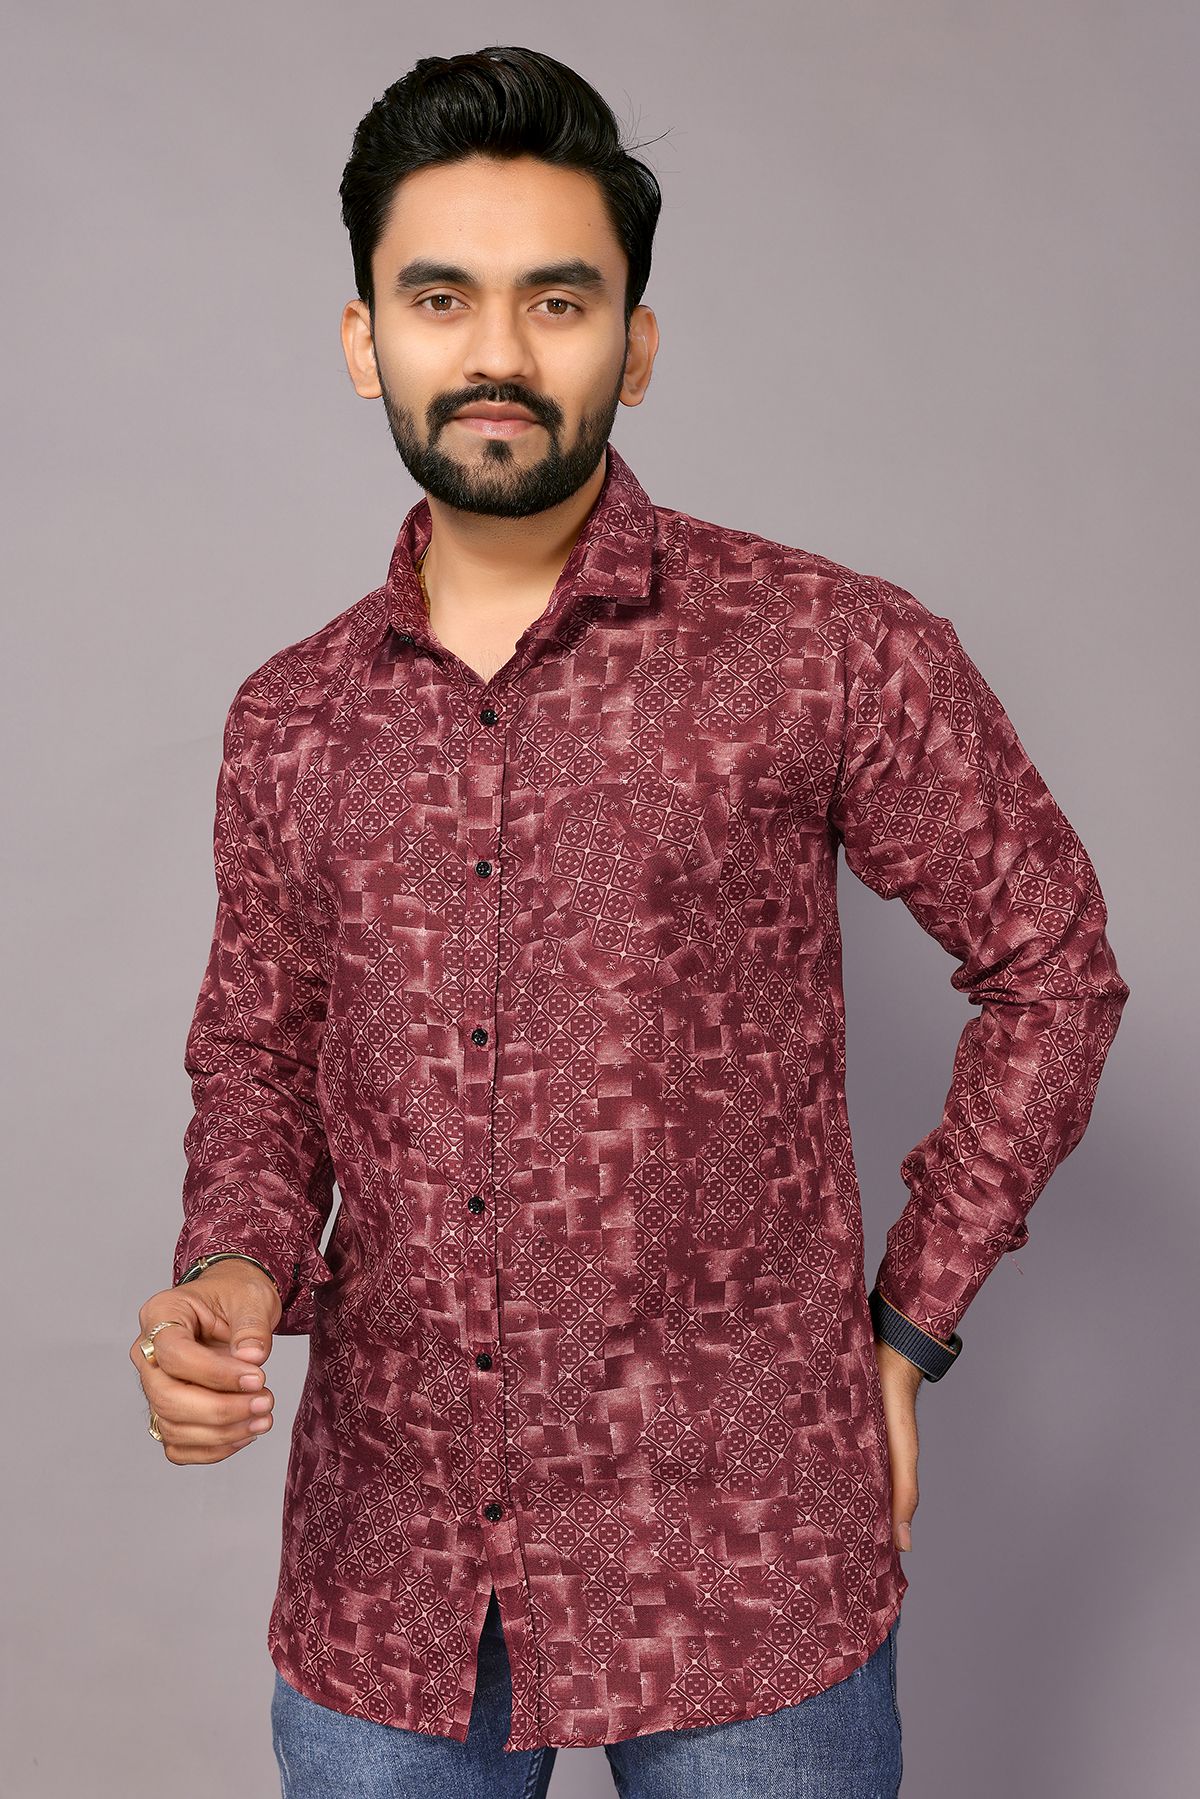     			Kashvi Cotton Blend Regular Fit Printed Full Sleeves Men's Casual Shirt - Maroon ( Pack of 1 )